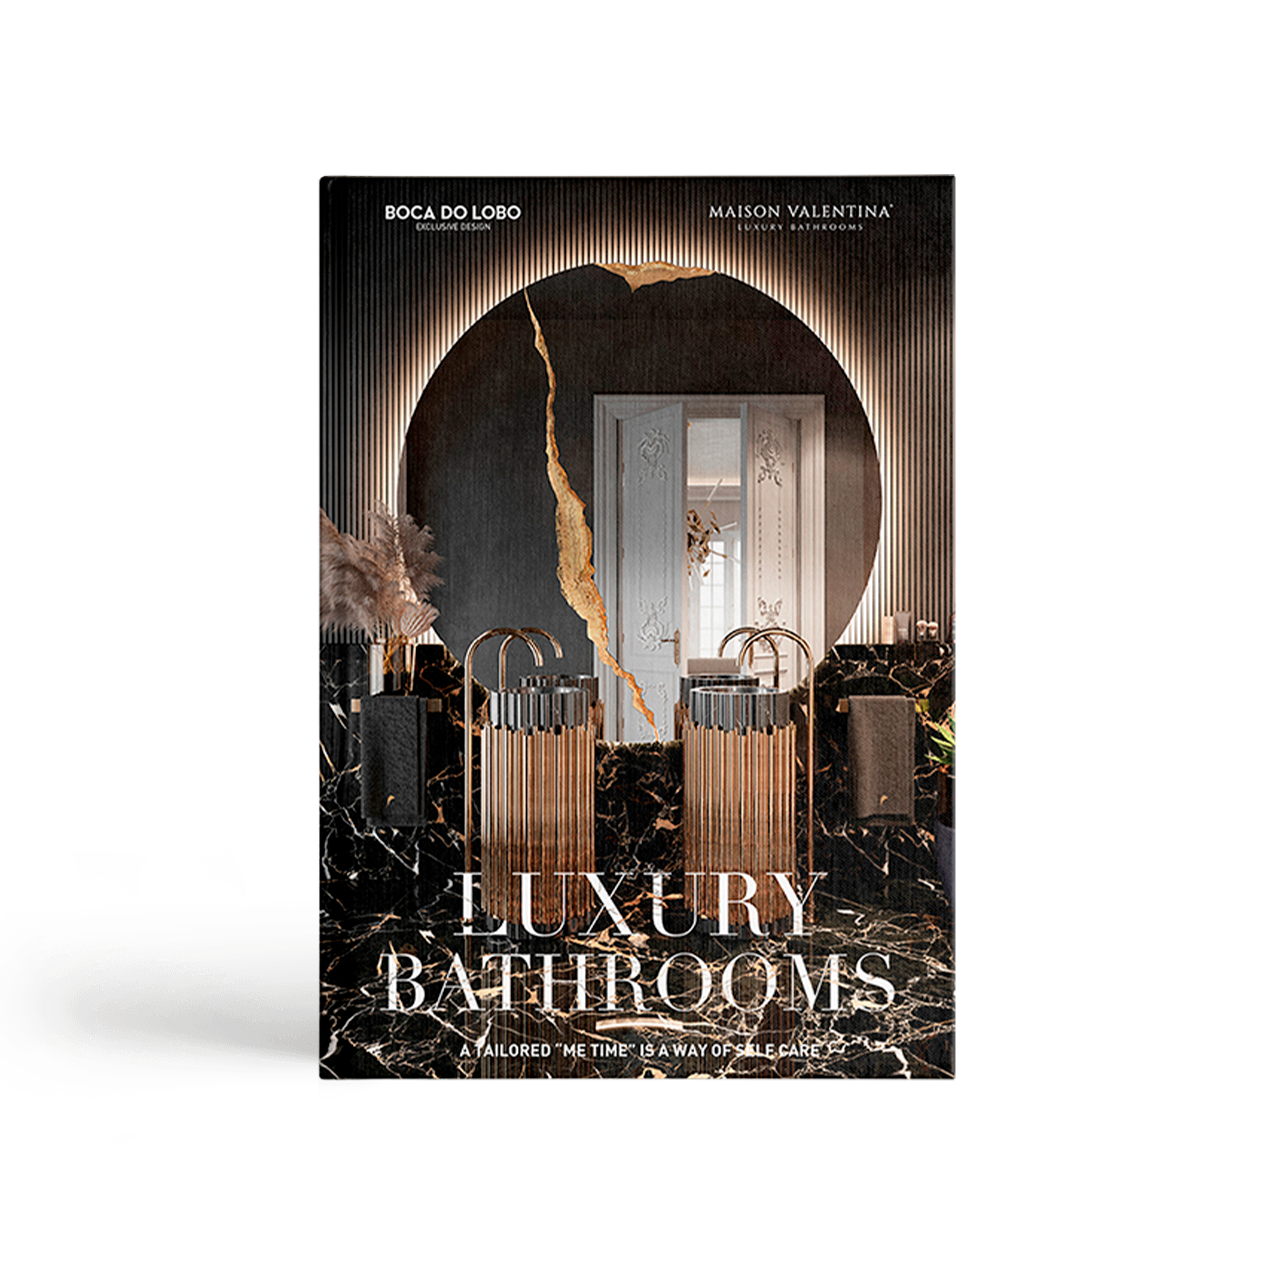 Download Luxury Bathrooms Ebook - Boca do Lobo Catalogues and Ebooks